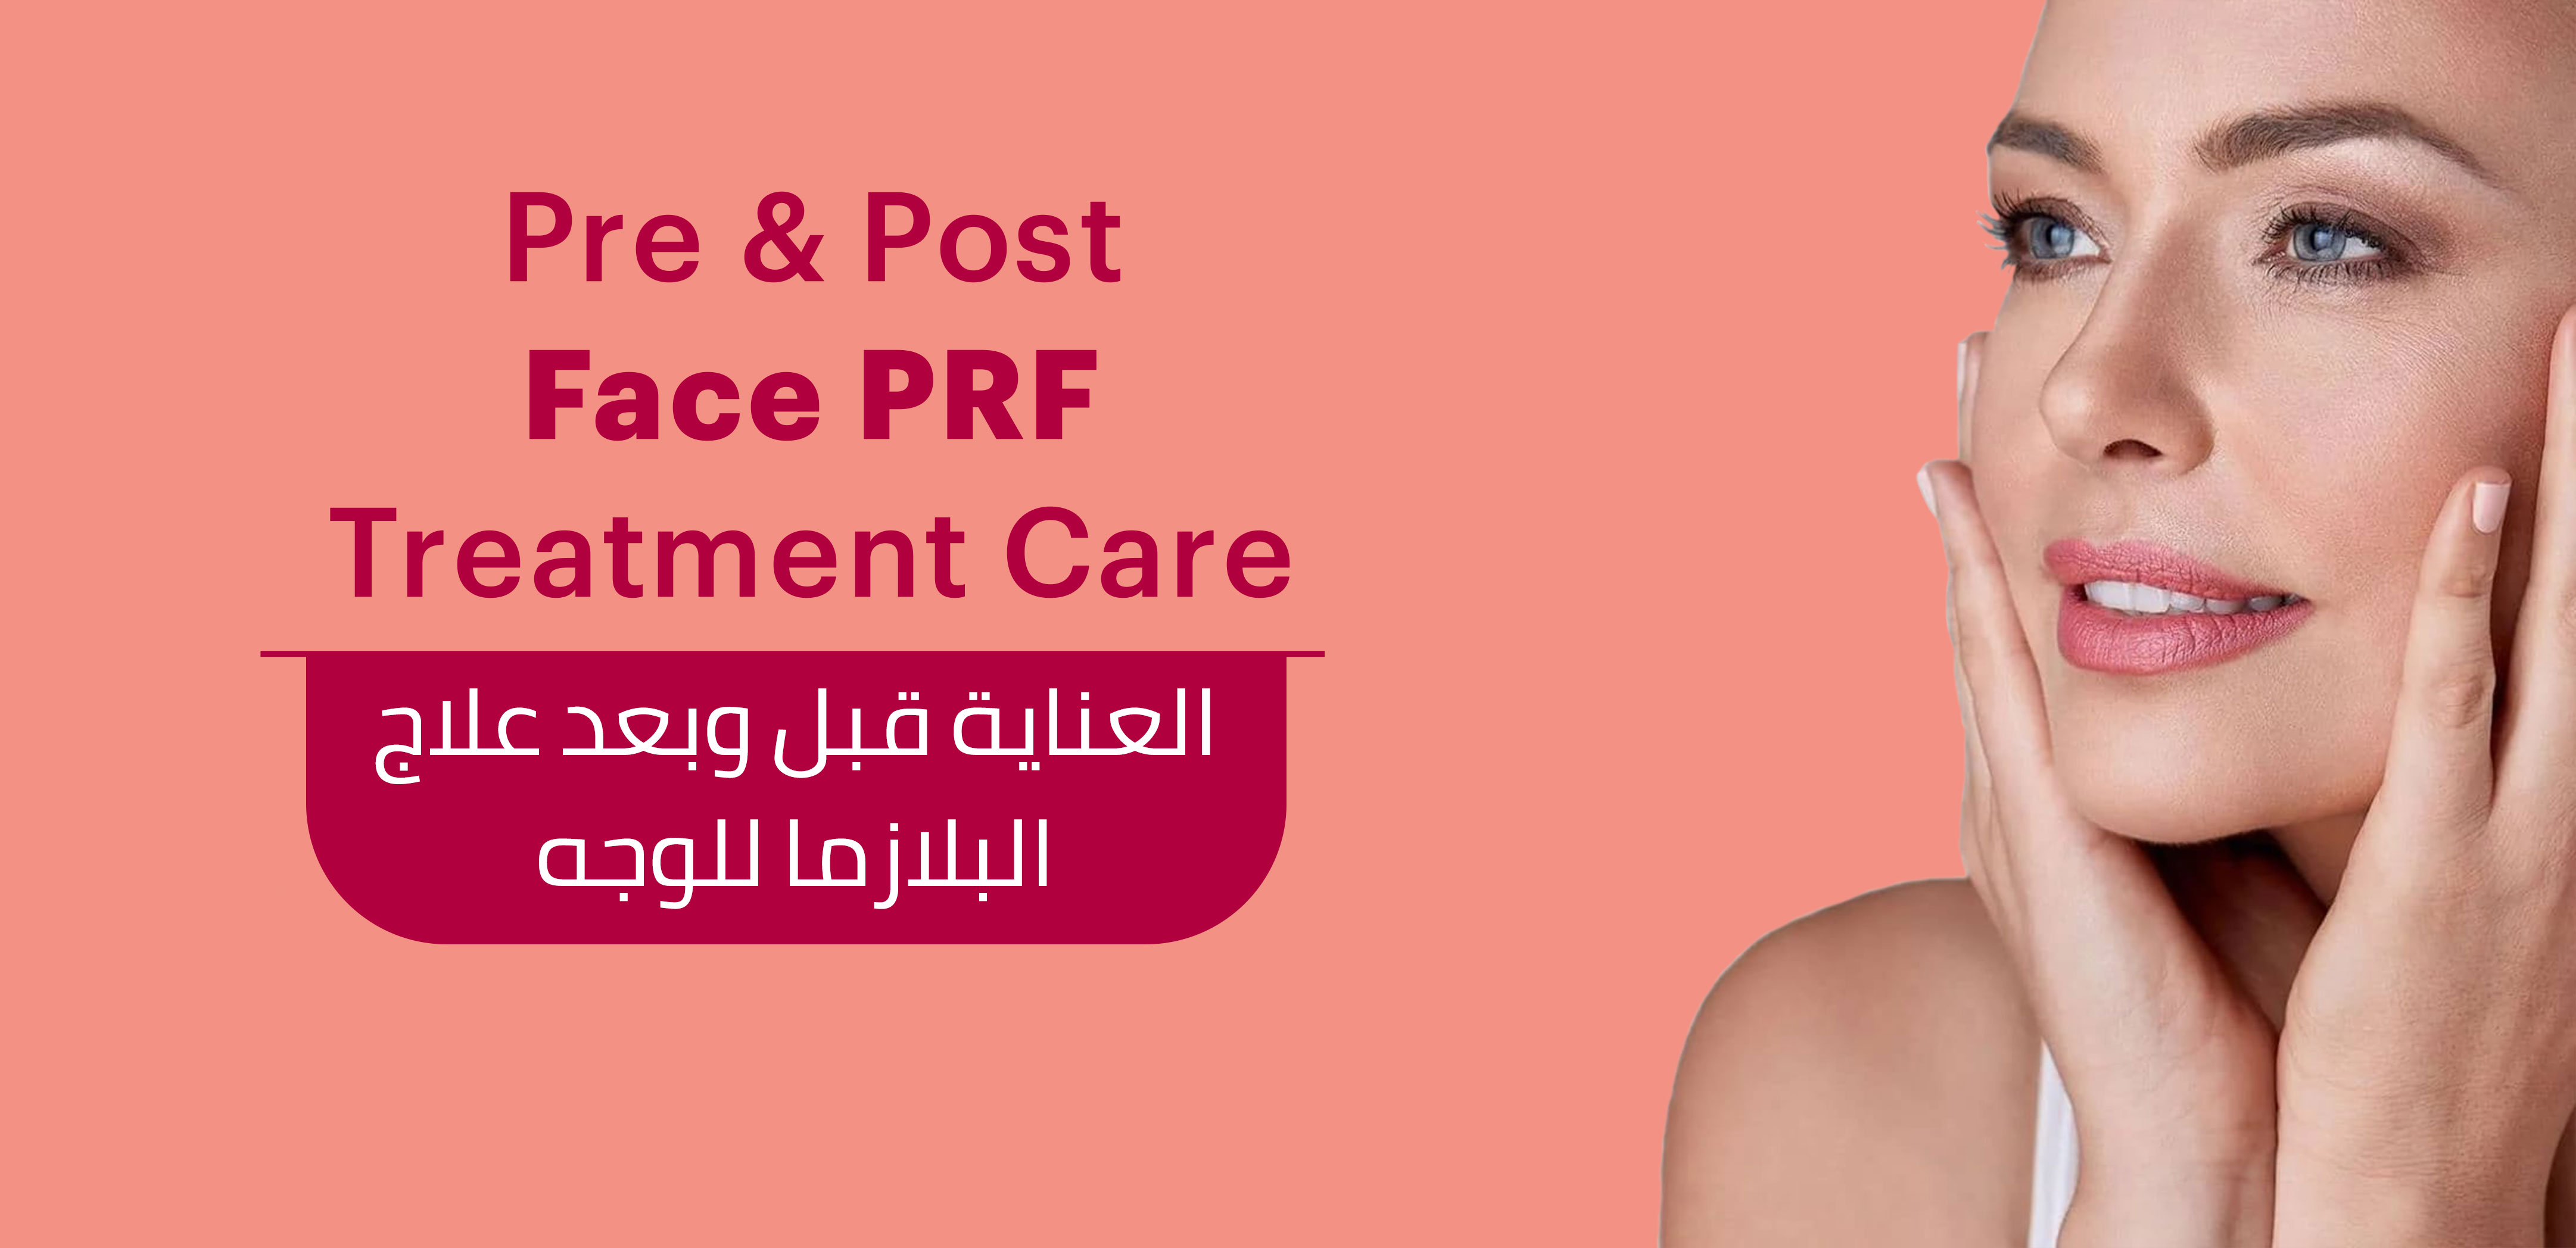 PRE & POST FACE PRF TREATMENT INSTRUCTIONS